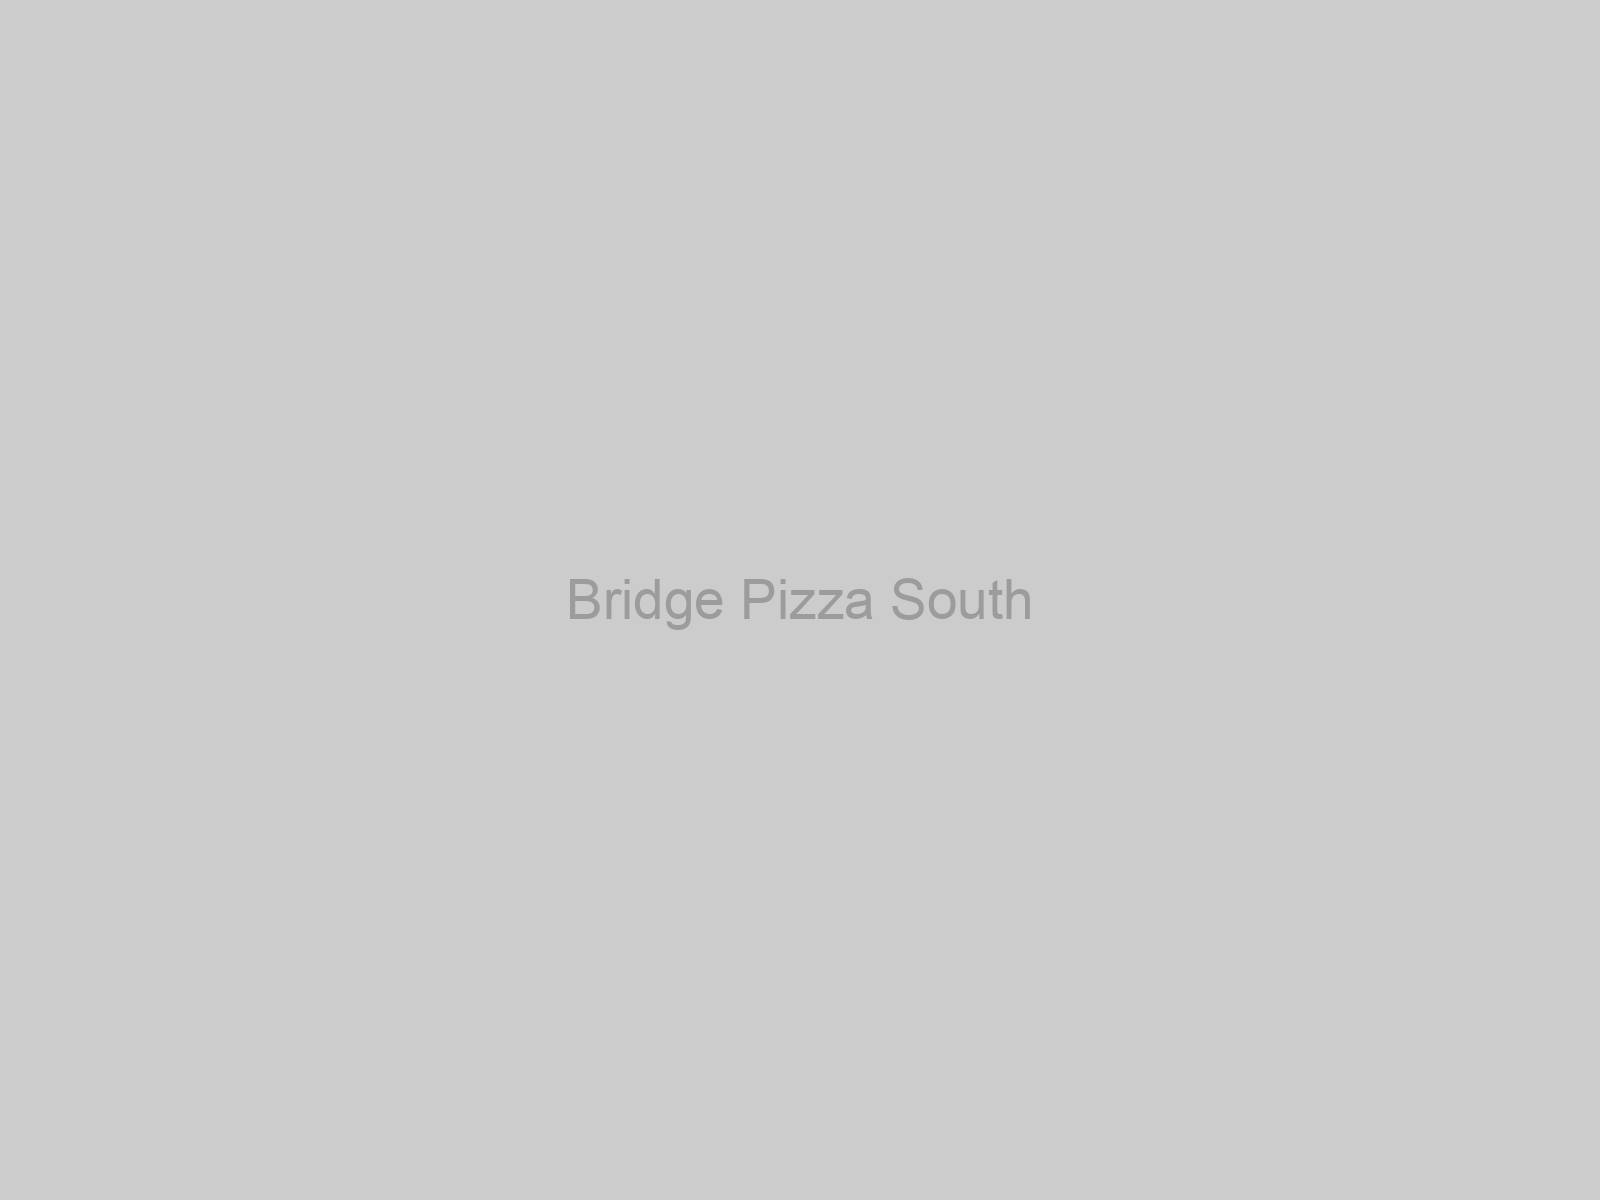 Bridge Pizza South